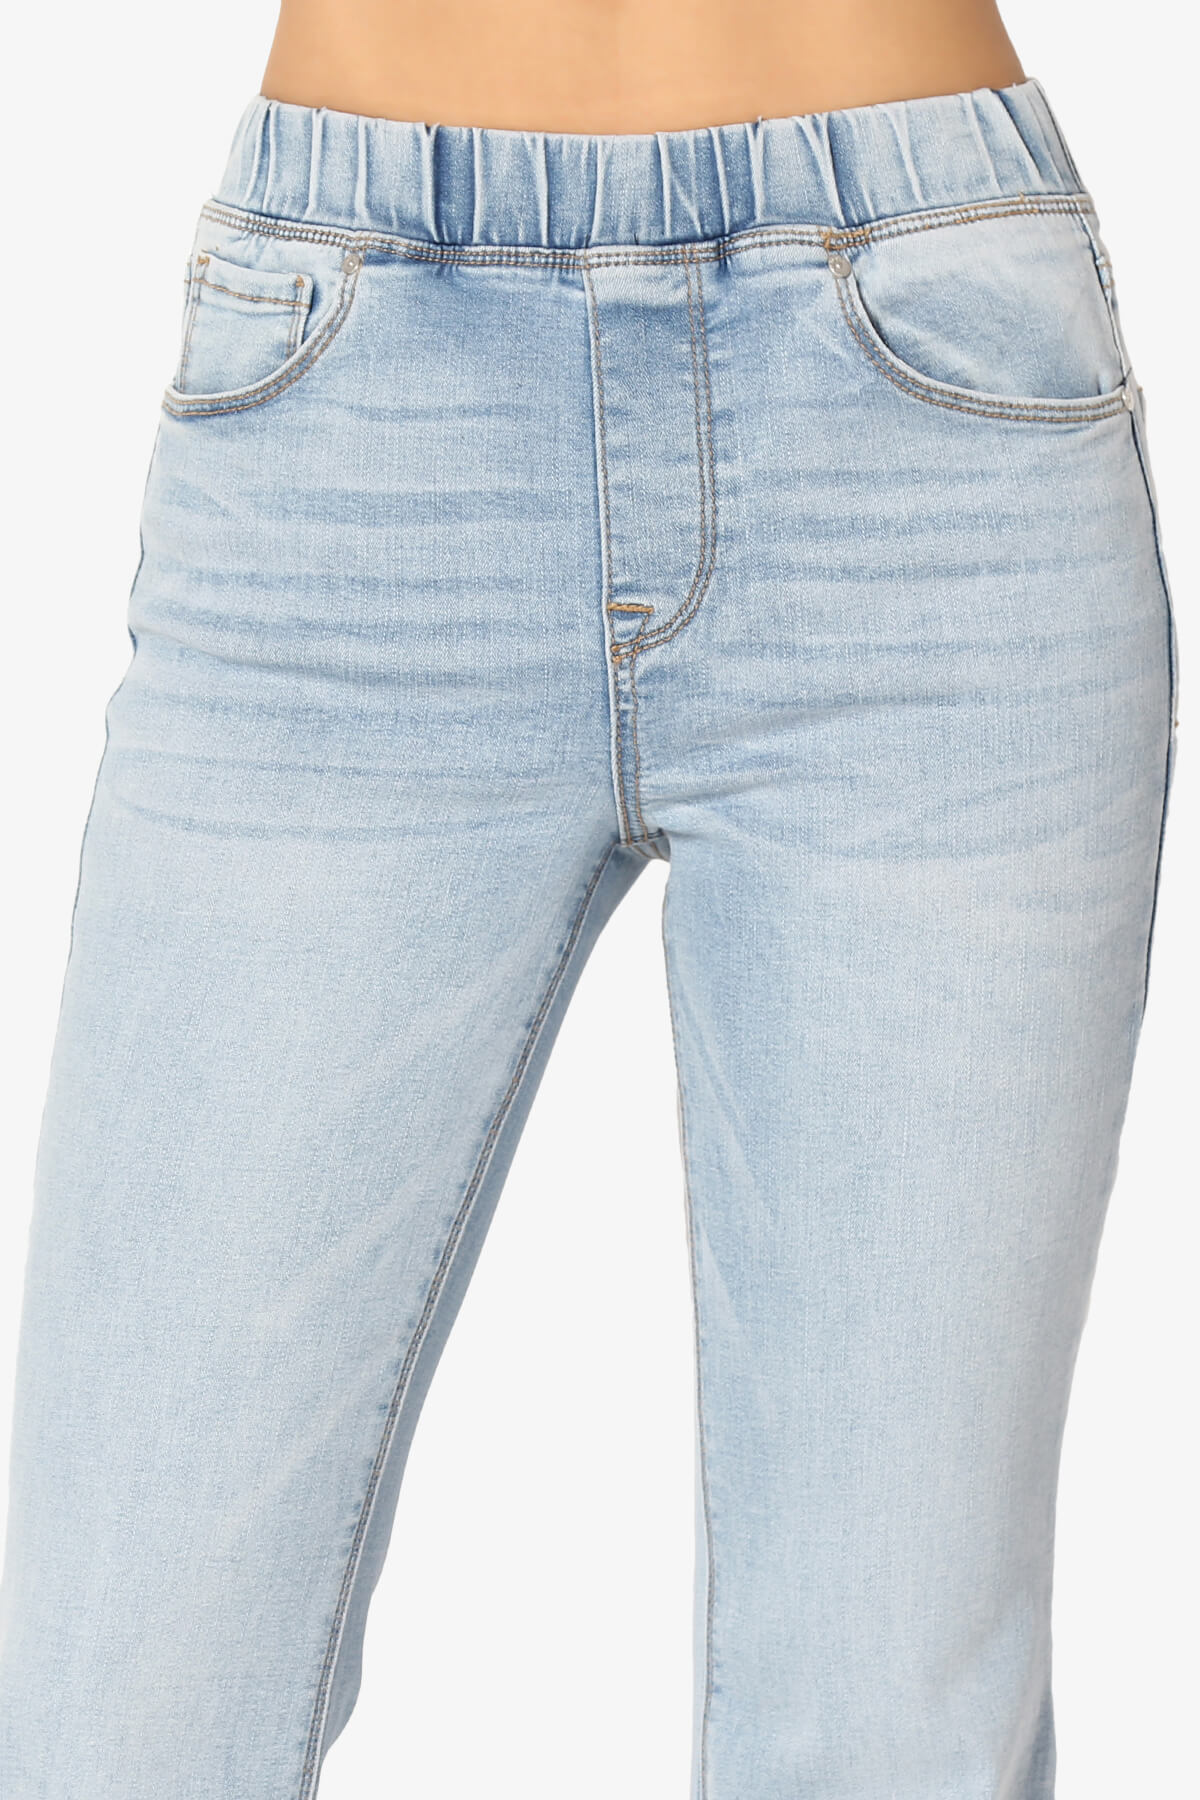 TheMogan Women's Elastic Waist High Rise Stretch Denim Long Flare Leg Jeans - image 5 of 7